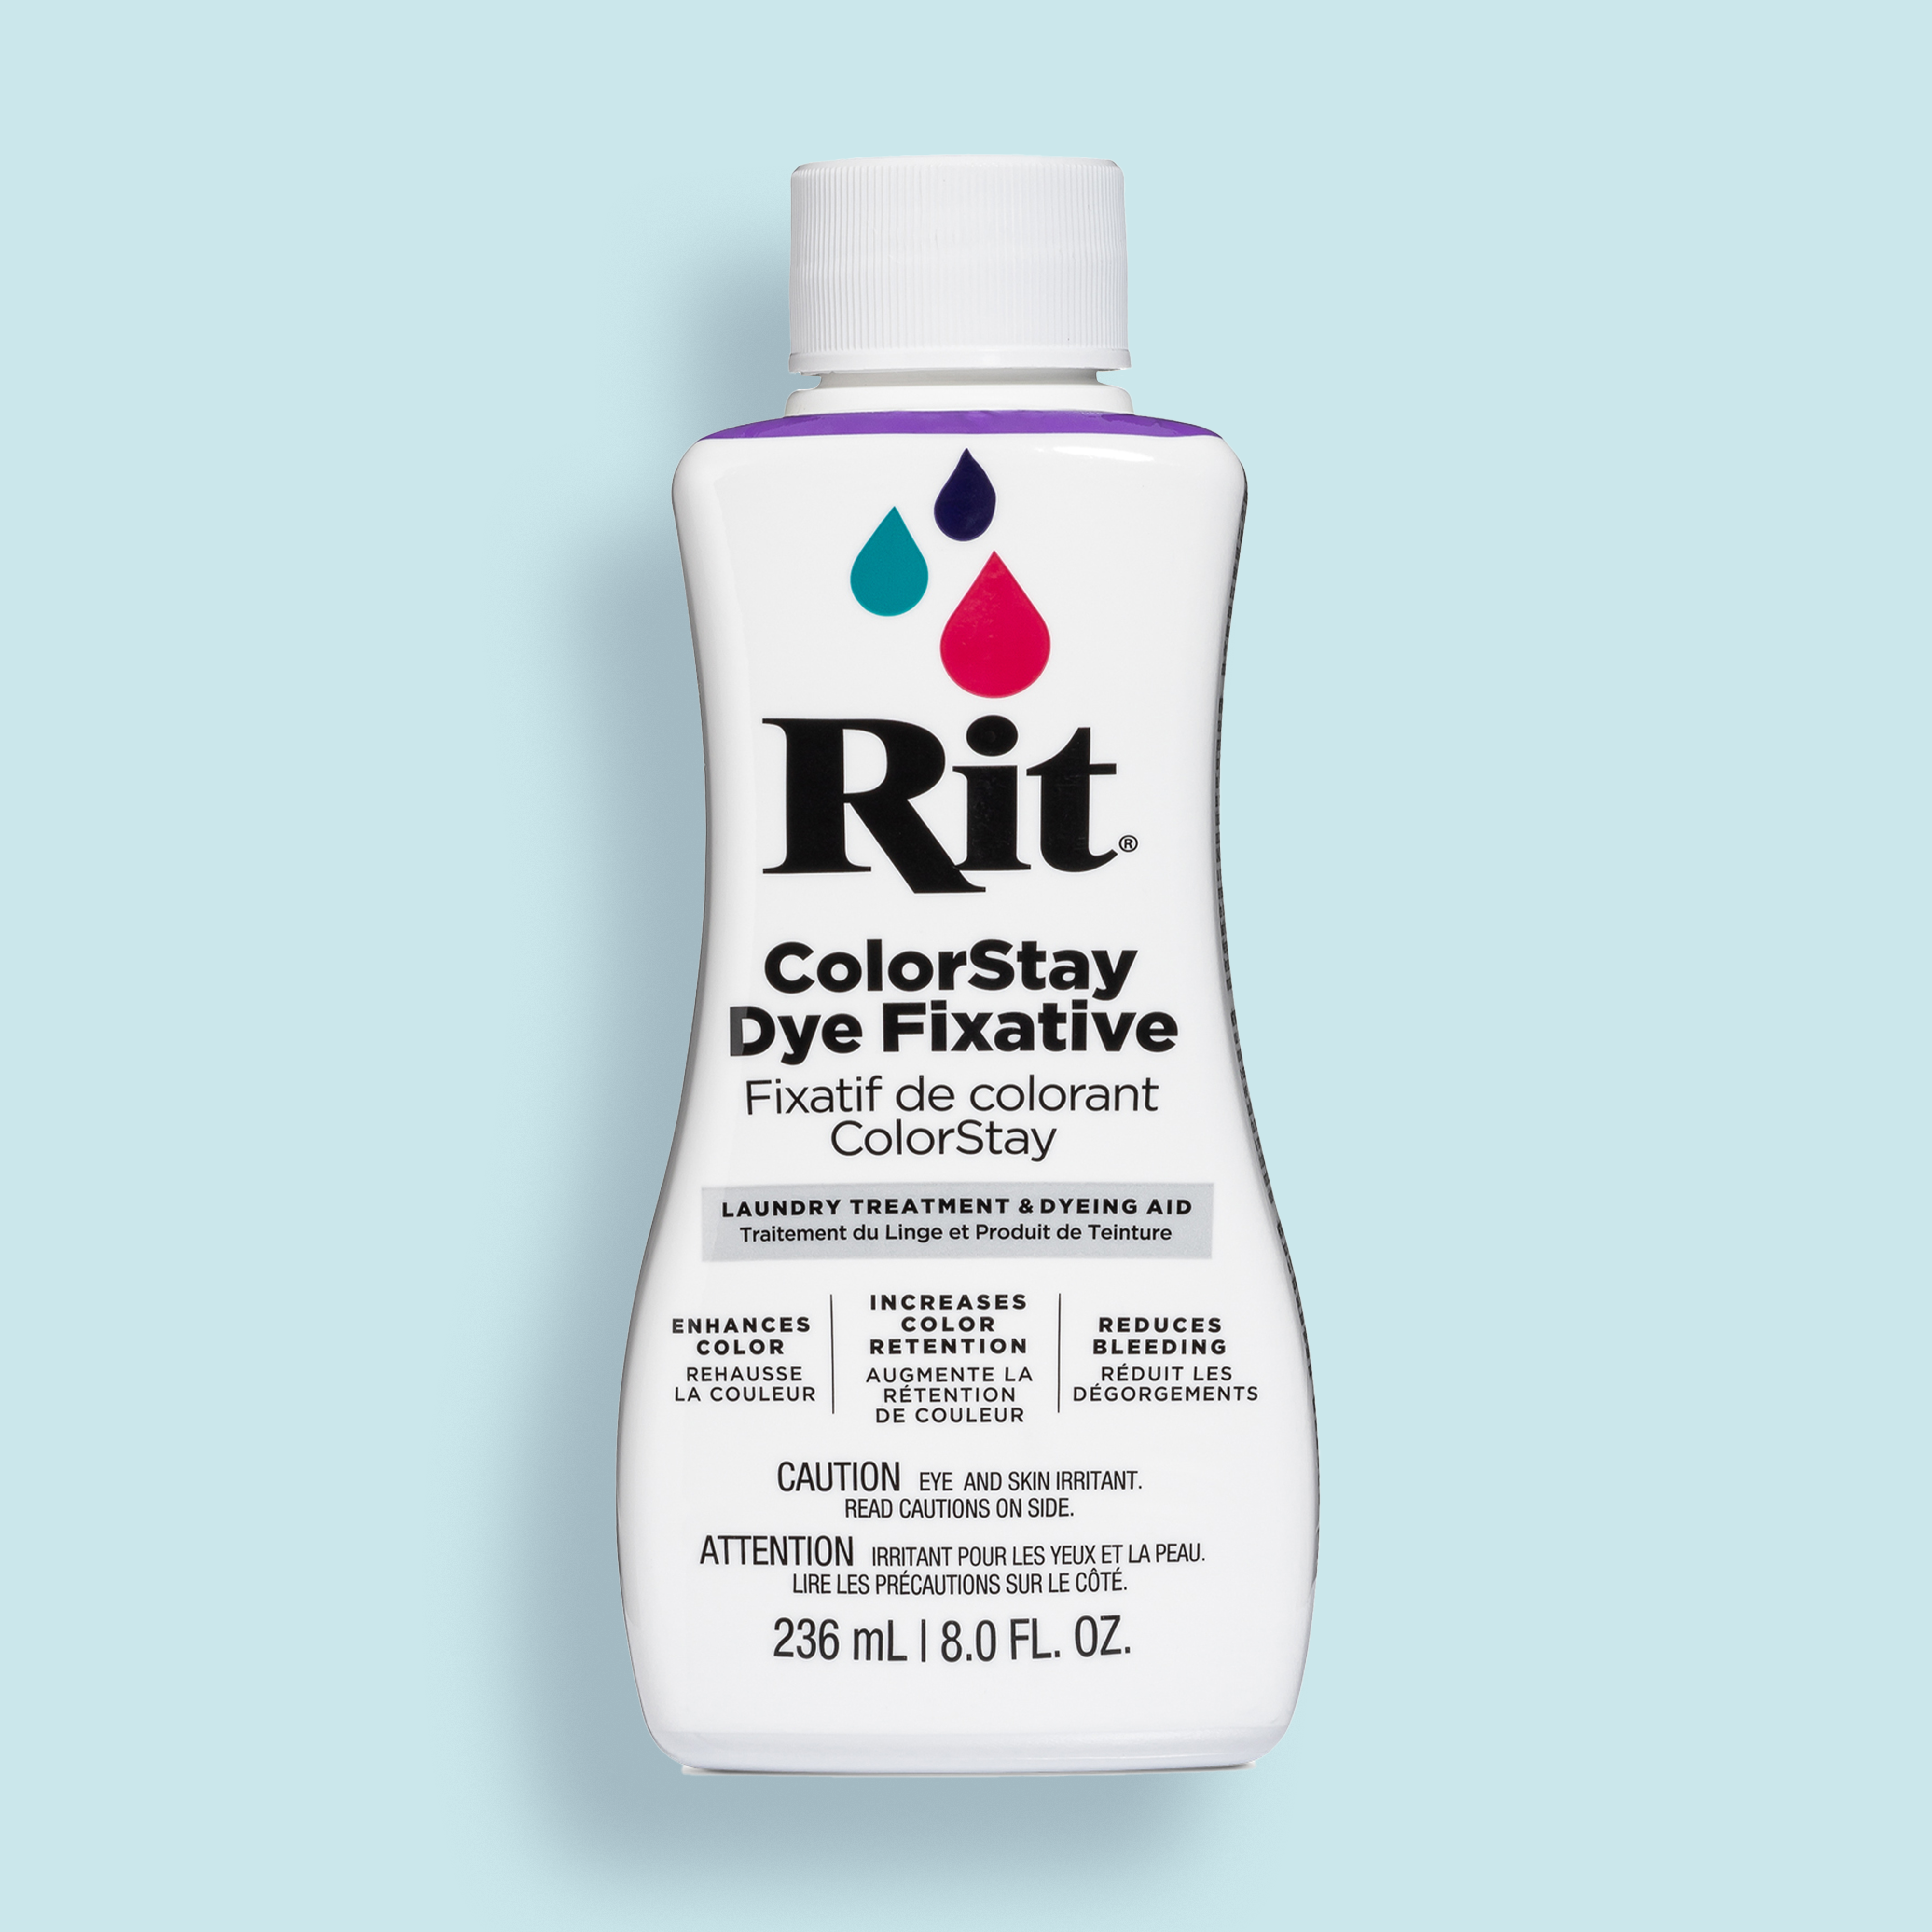 Rit ColorStay Dye Fixative- 